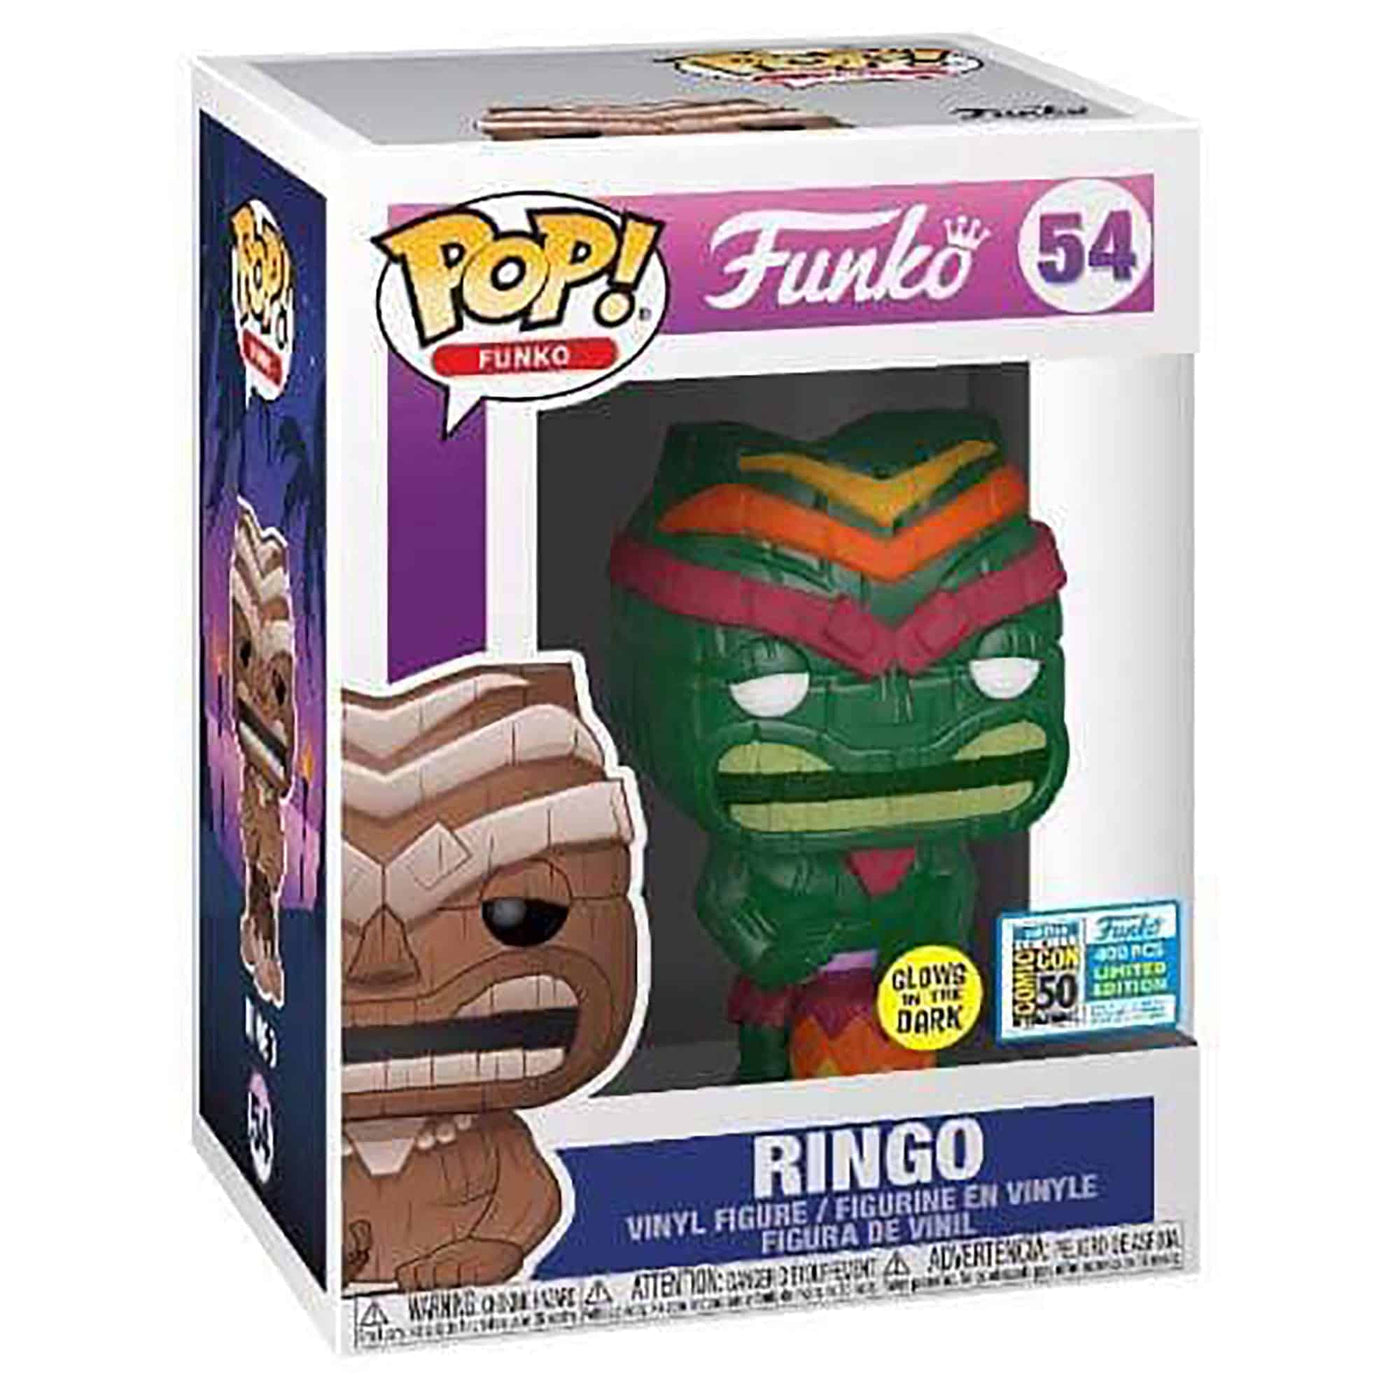 POP! Funko: 54 Funko, Ringo (400 PCS) (GITD) Exclusive